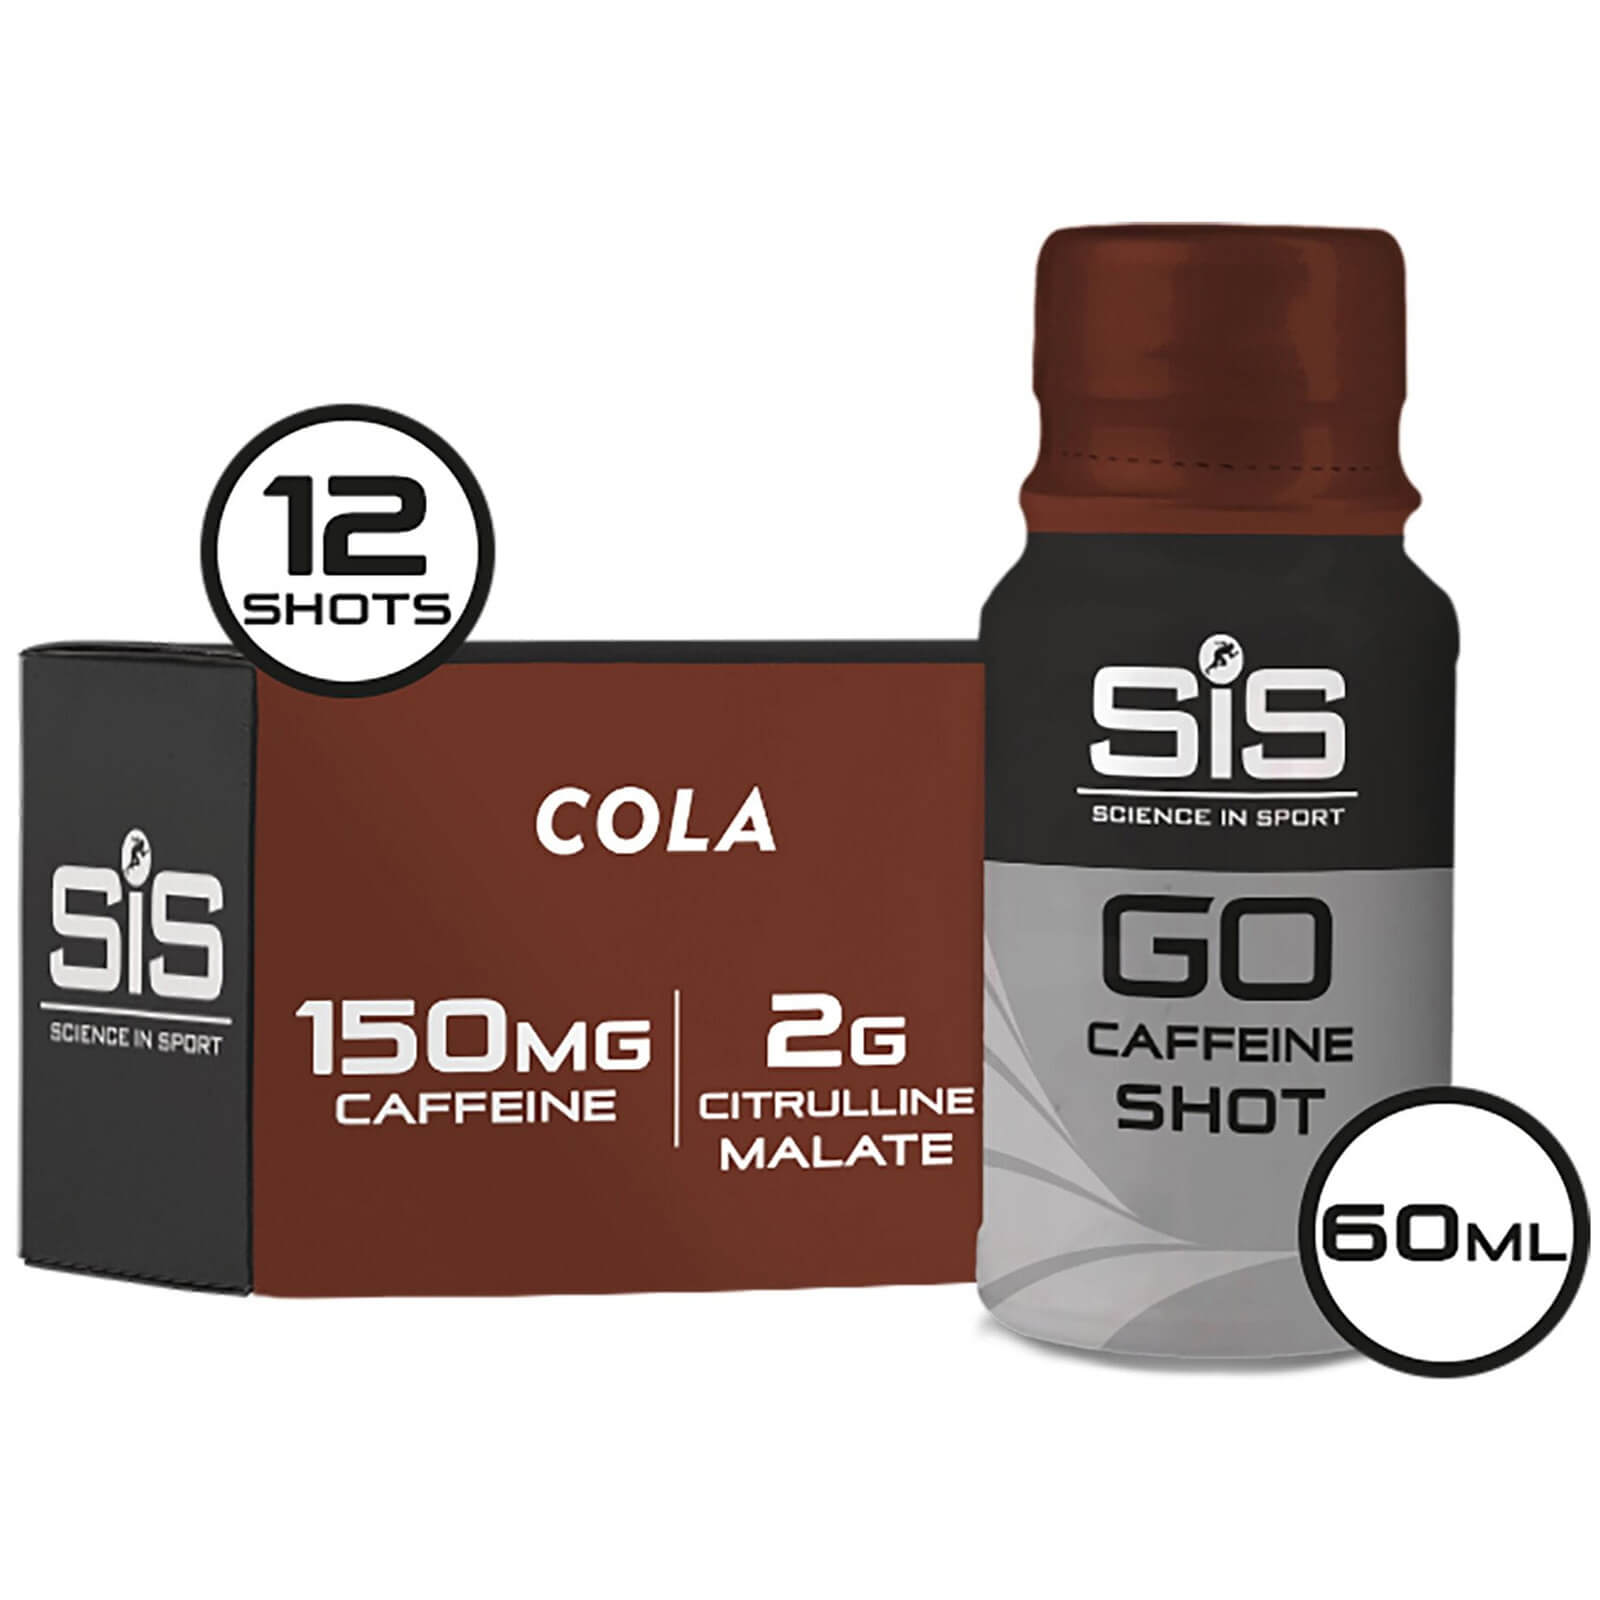 Science in Sport GO Caffeine Shot 12 Pack - Cola